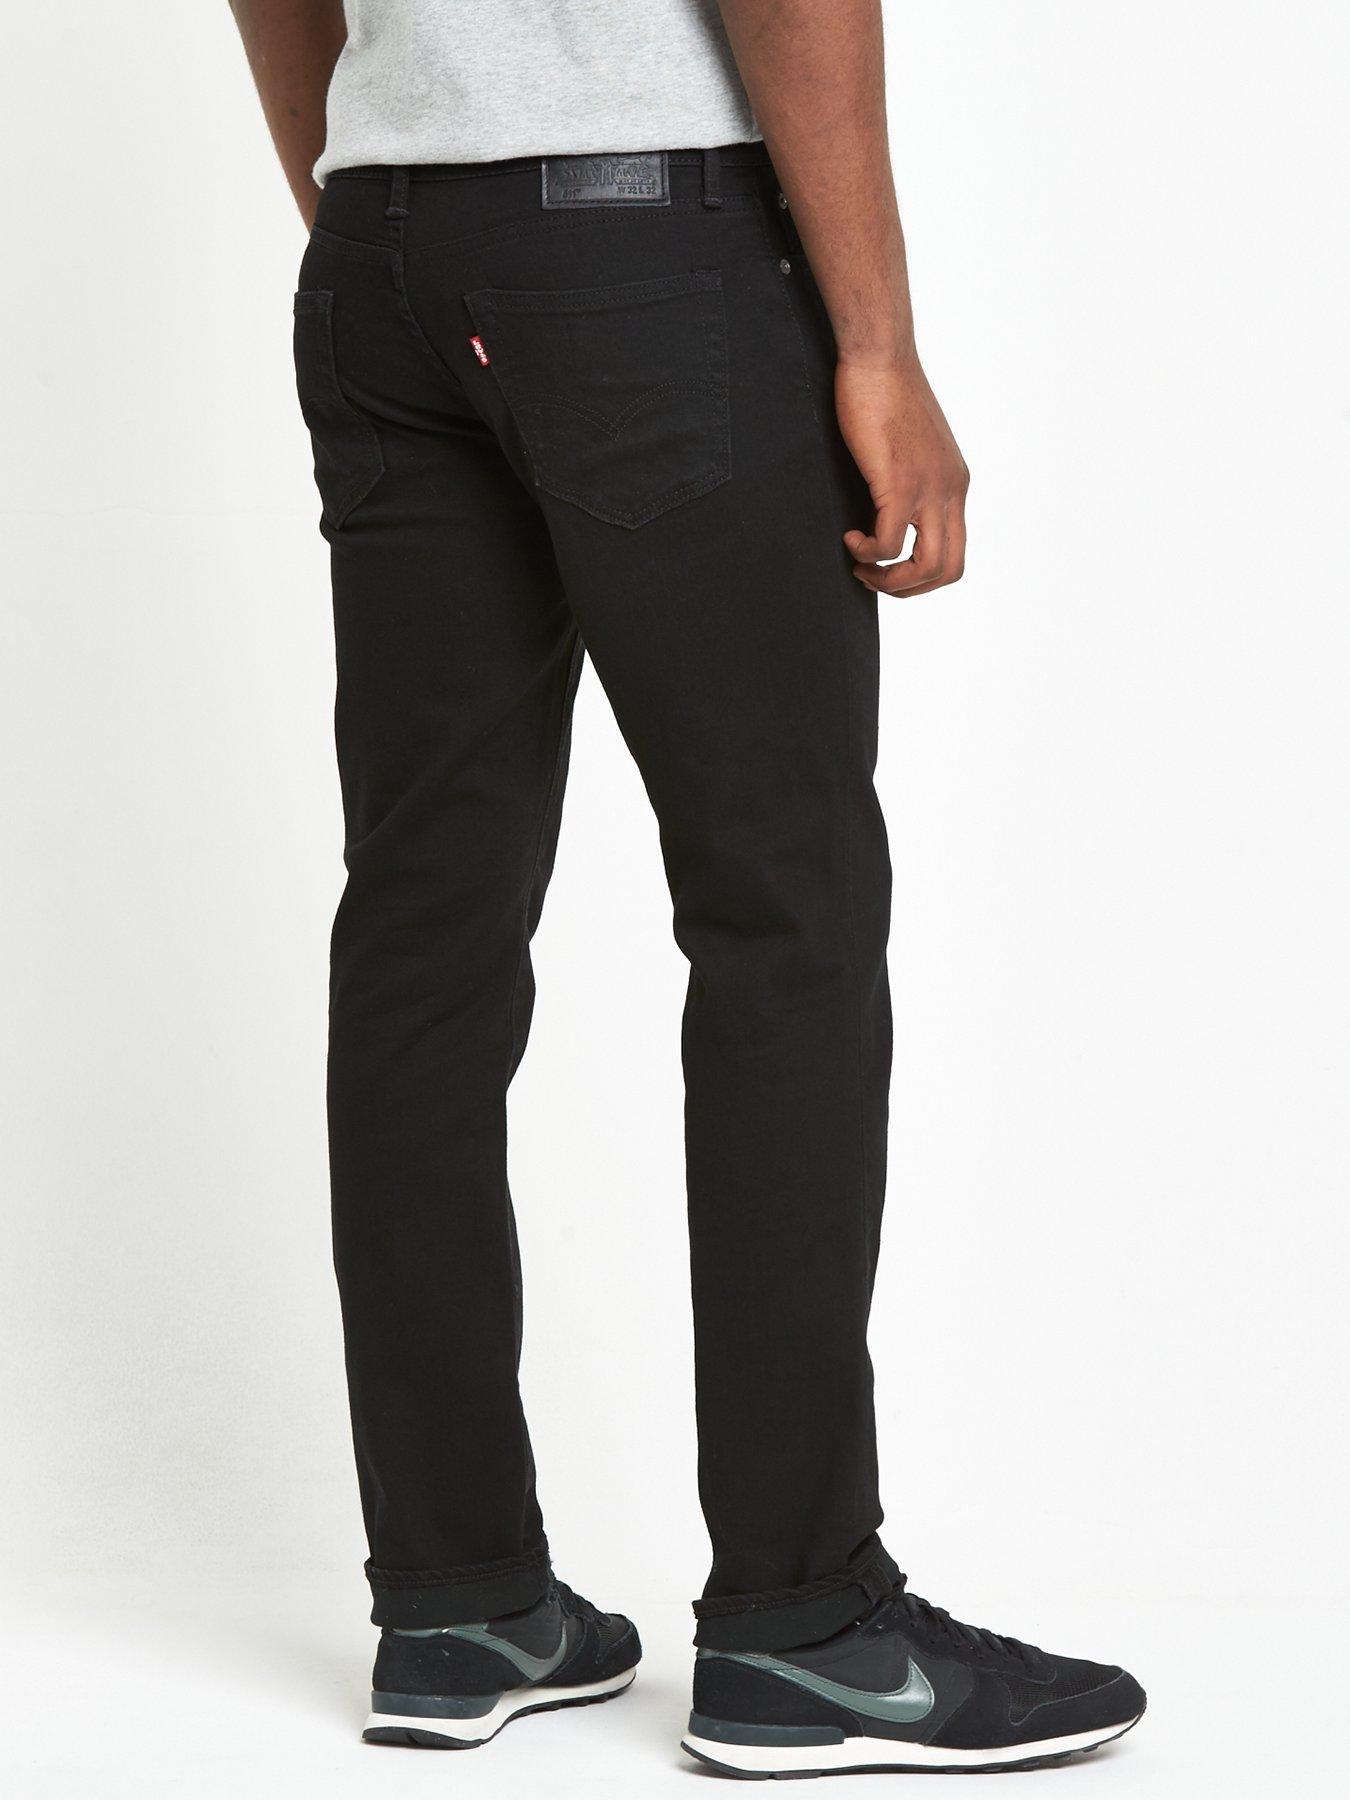 black skinny levi jeans